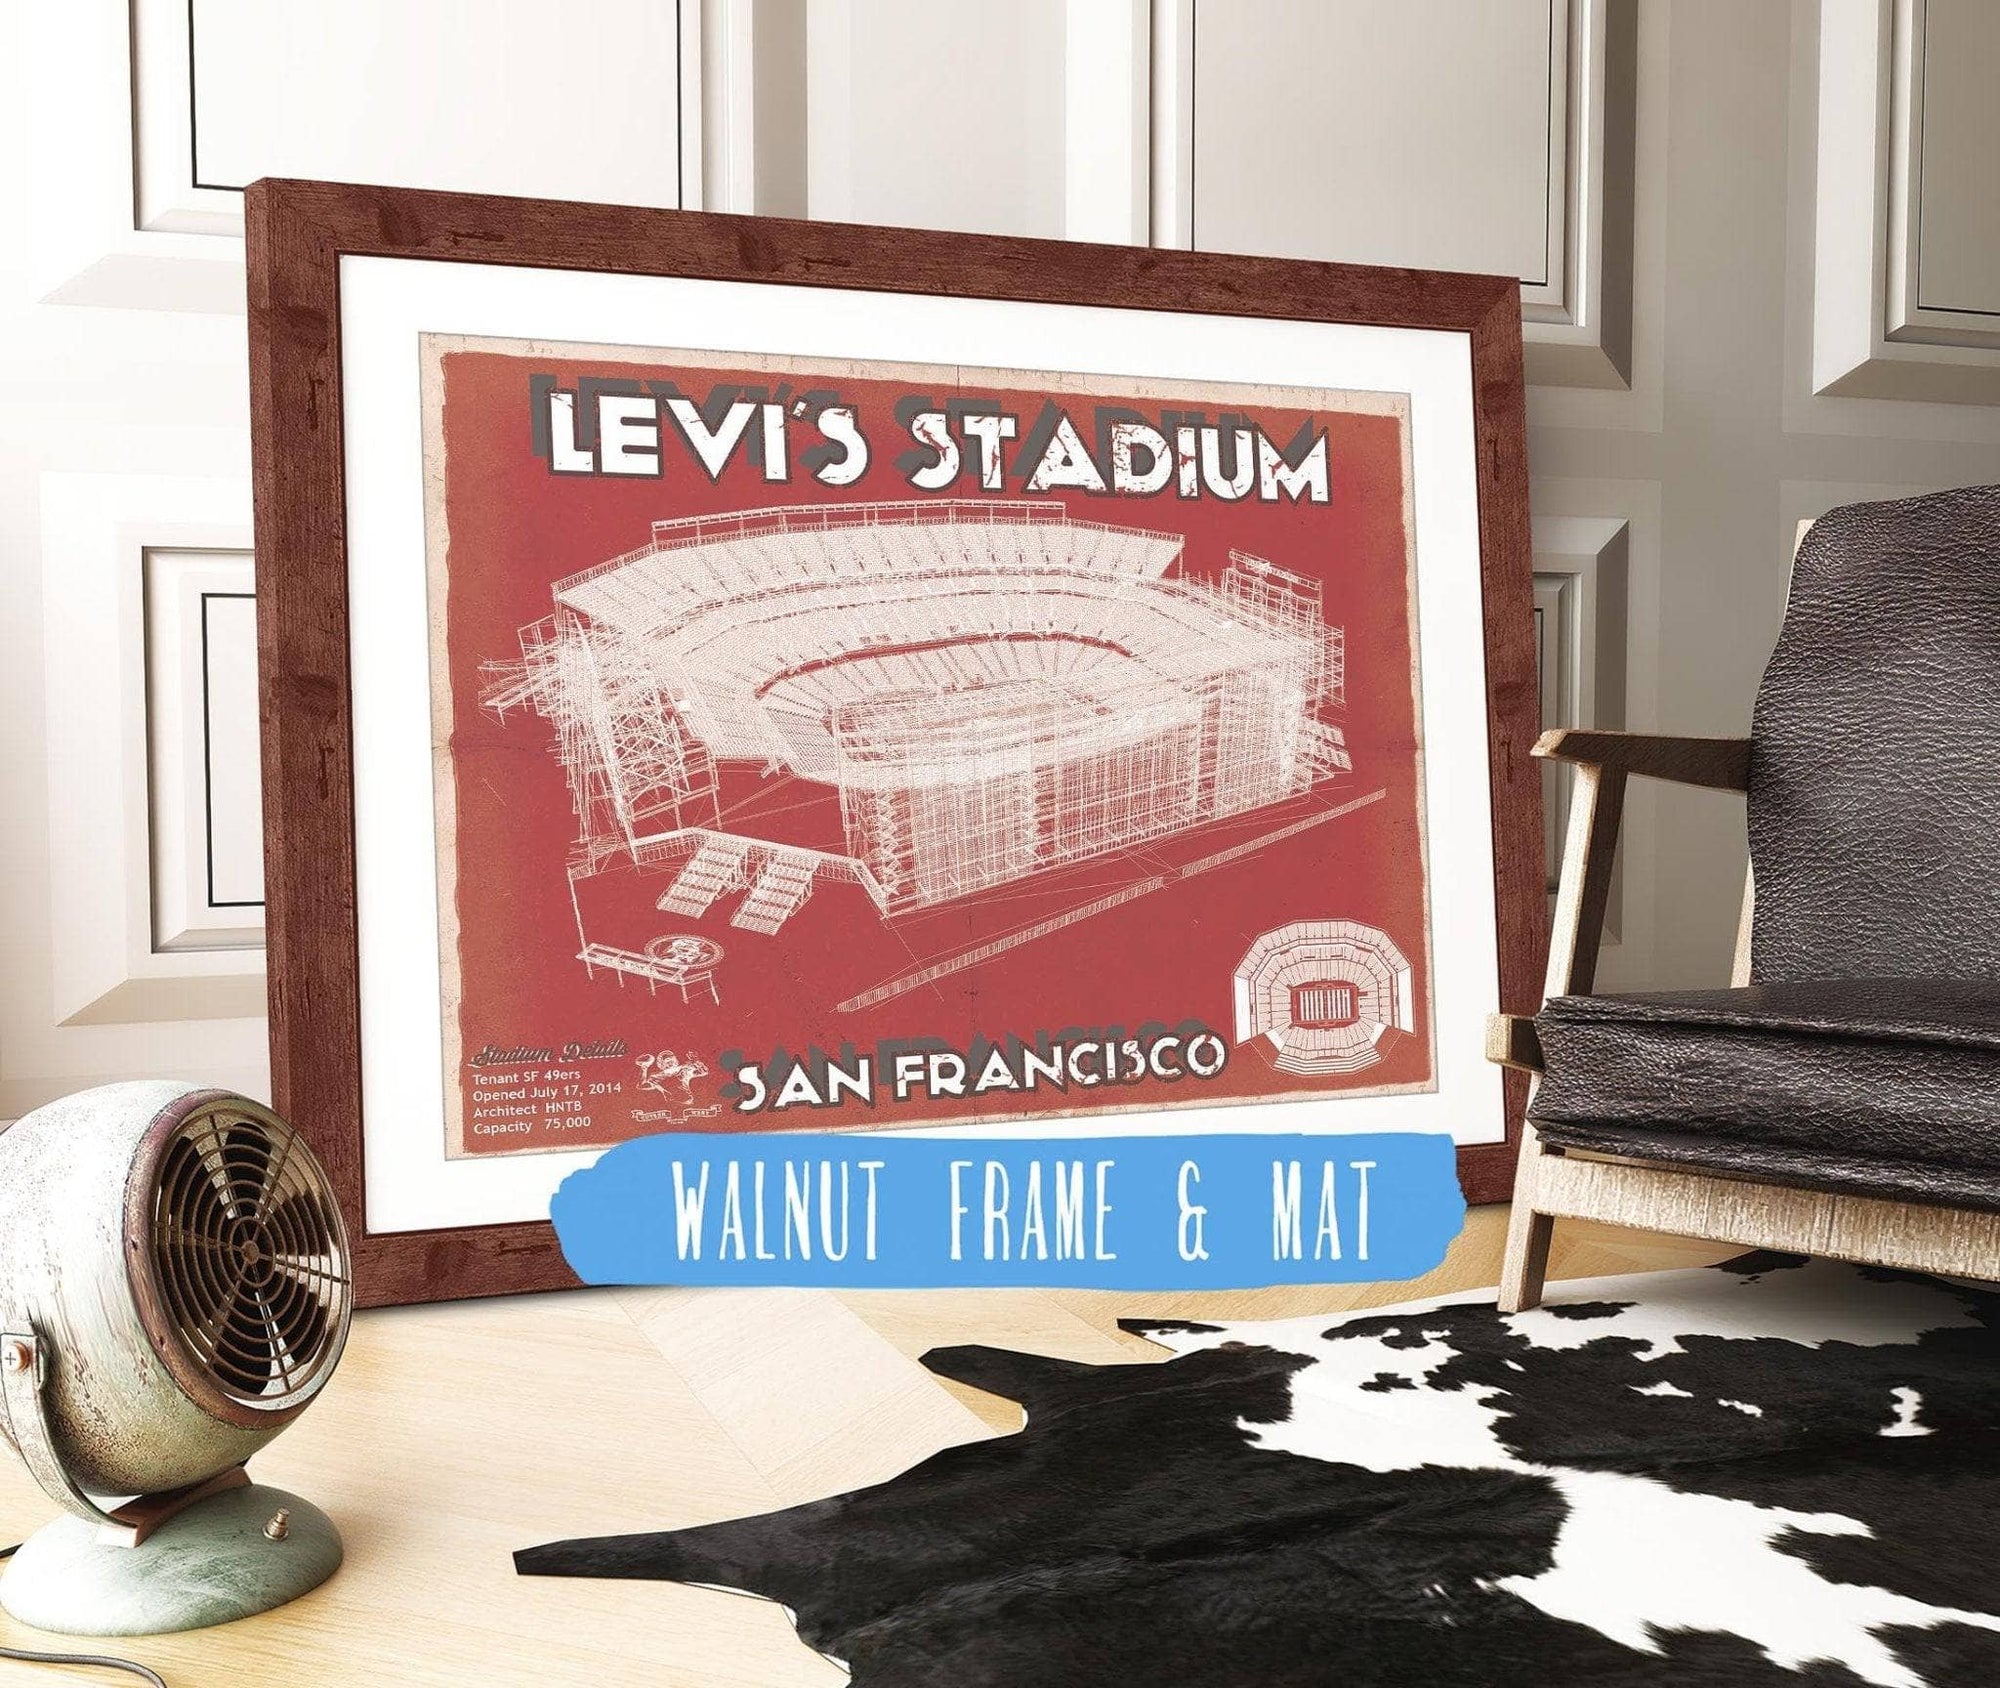 Cutler West Pro Football Collection 14" x 11" / Walnut Frame & Mat San Francisco 49ers - Levi's Stadium Seating Chart - Vintage Football Print 698227176-TOP